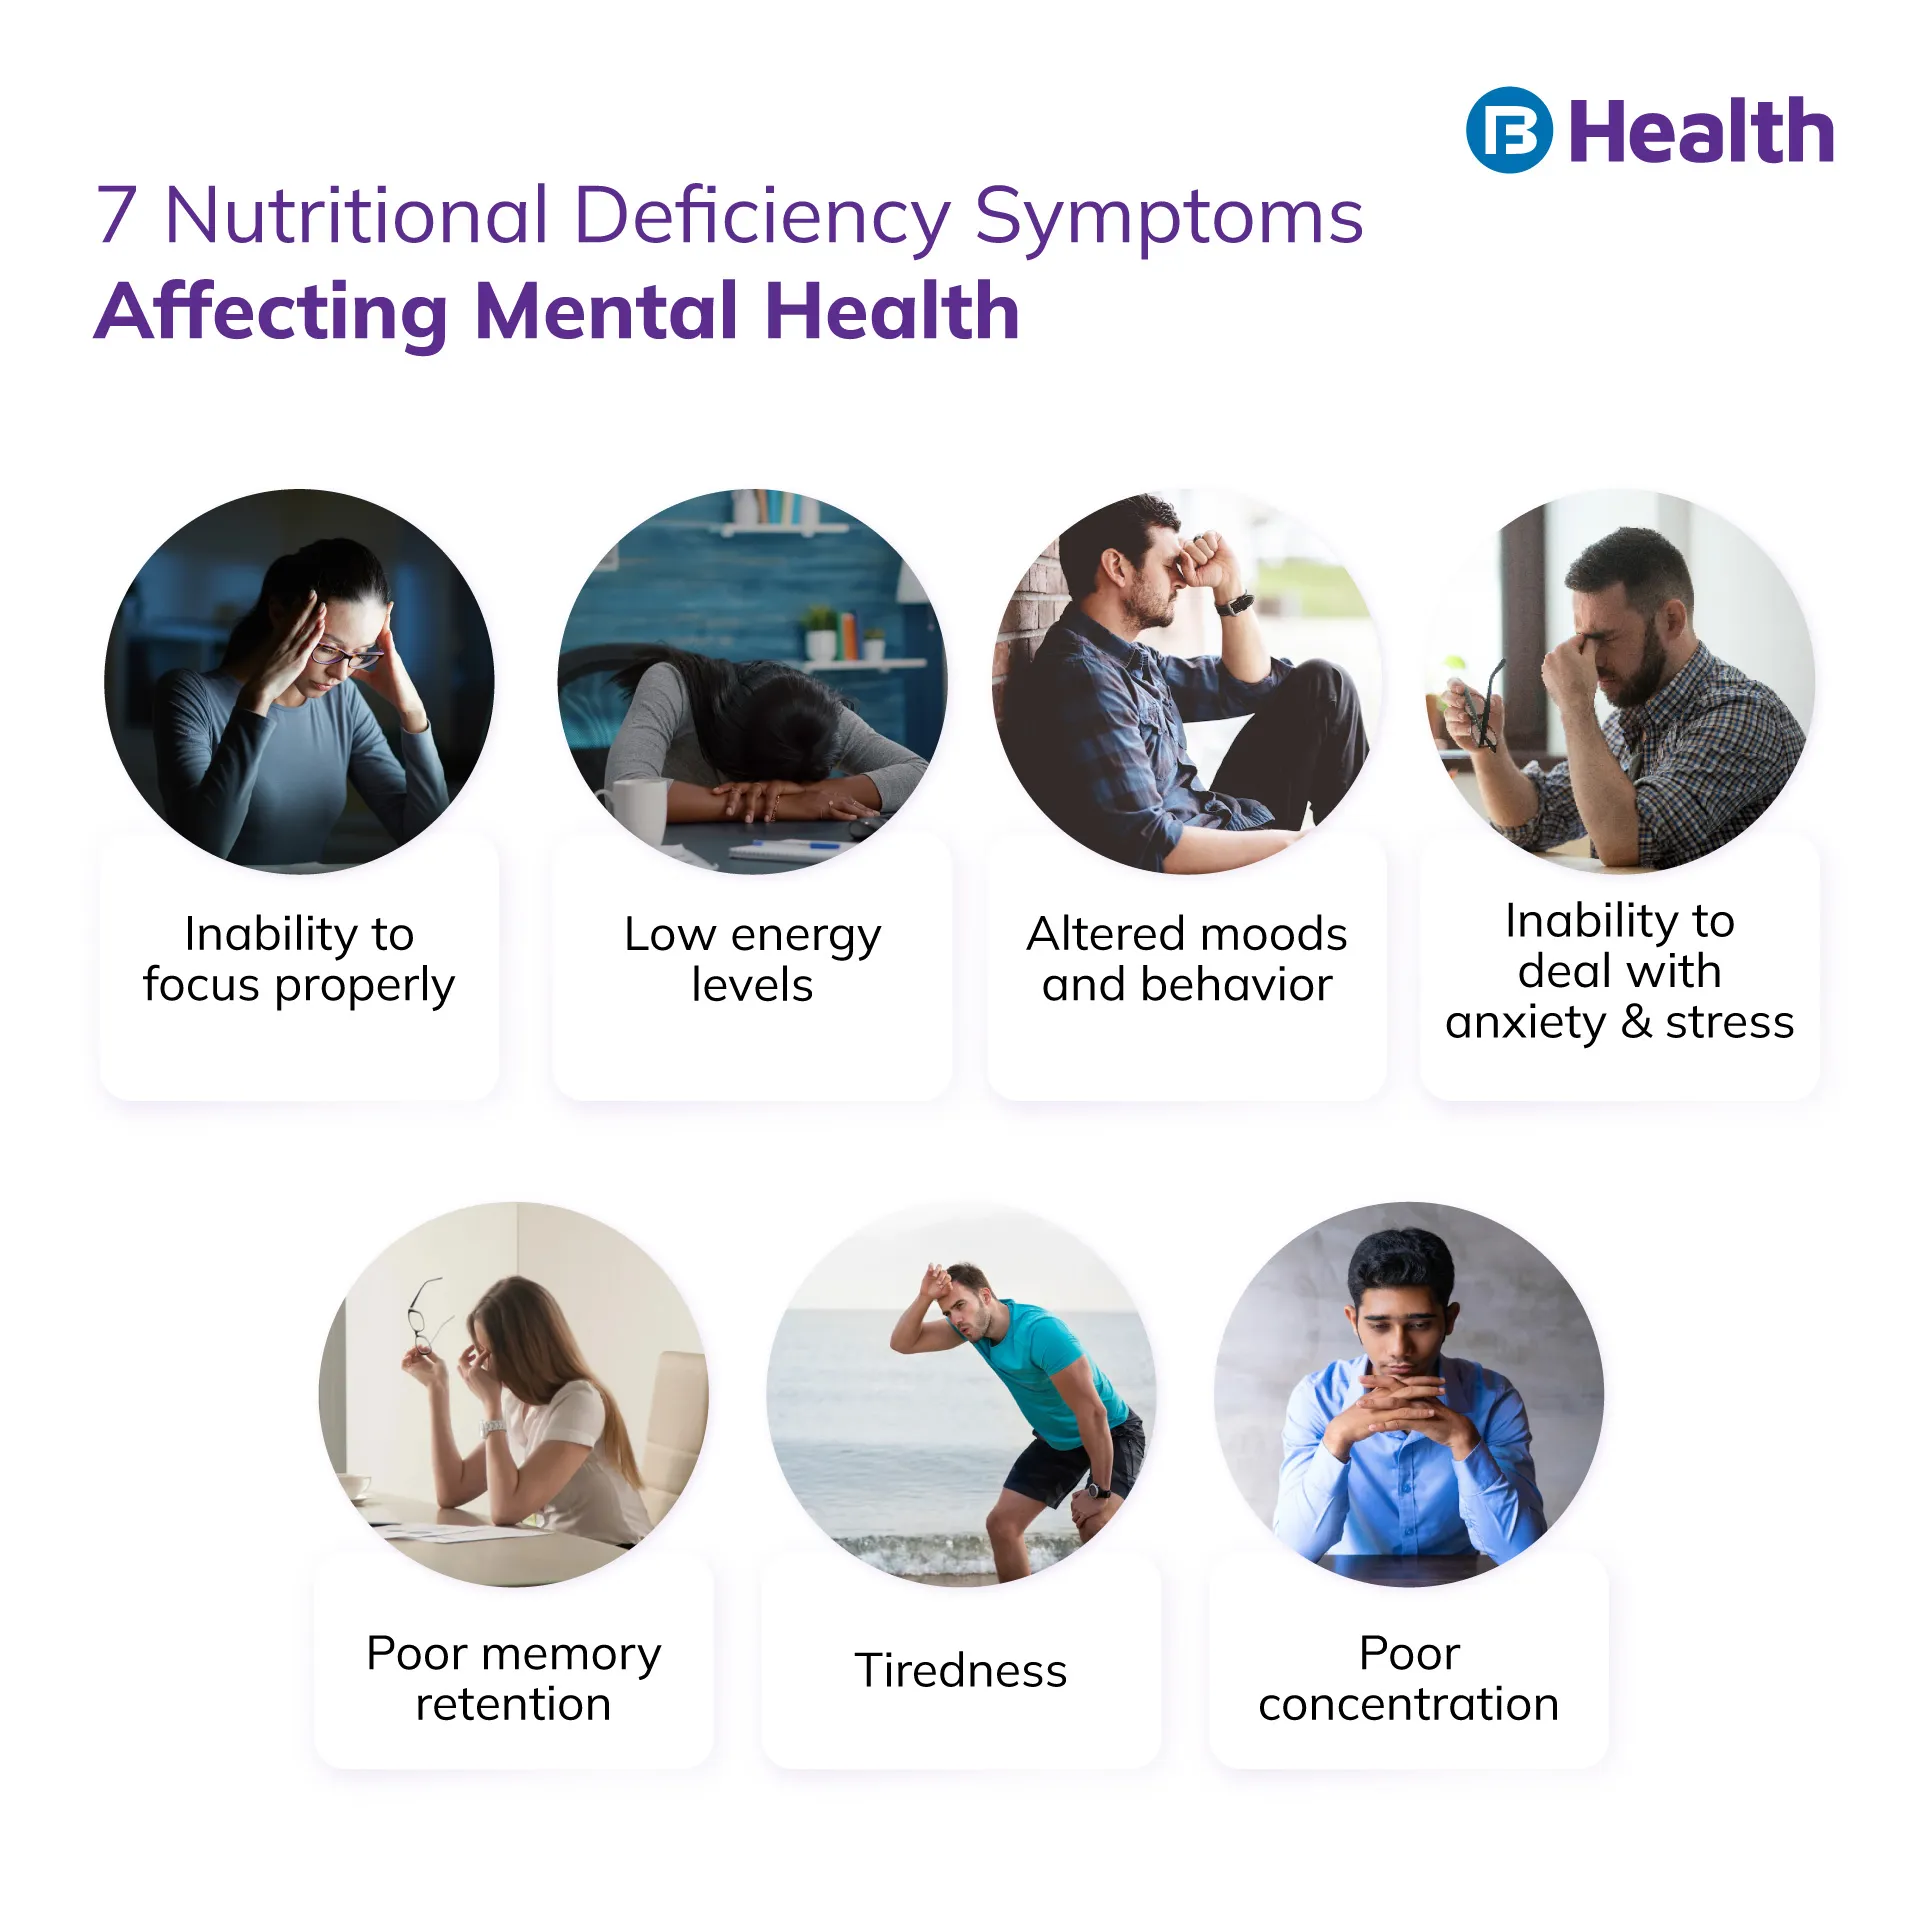 Nutritional Deficiency symptoms affecting mental health